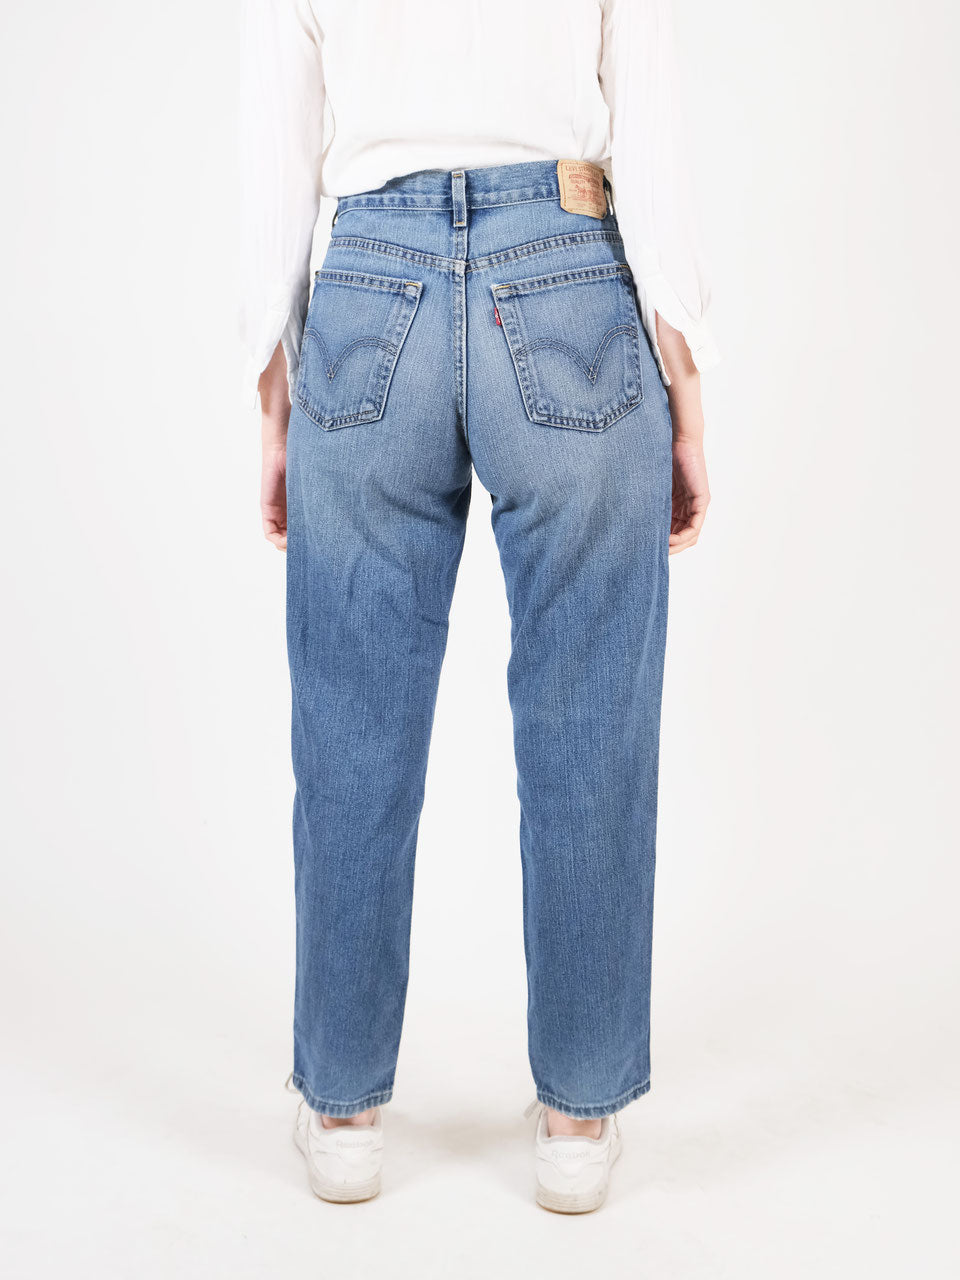 Levis Jeans 550 w29